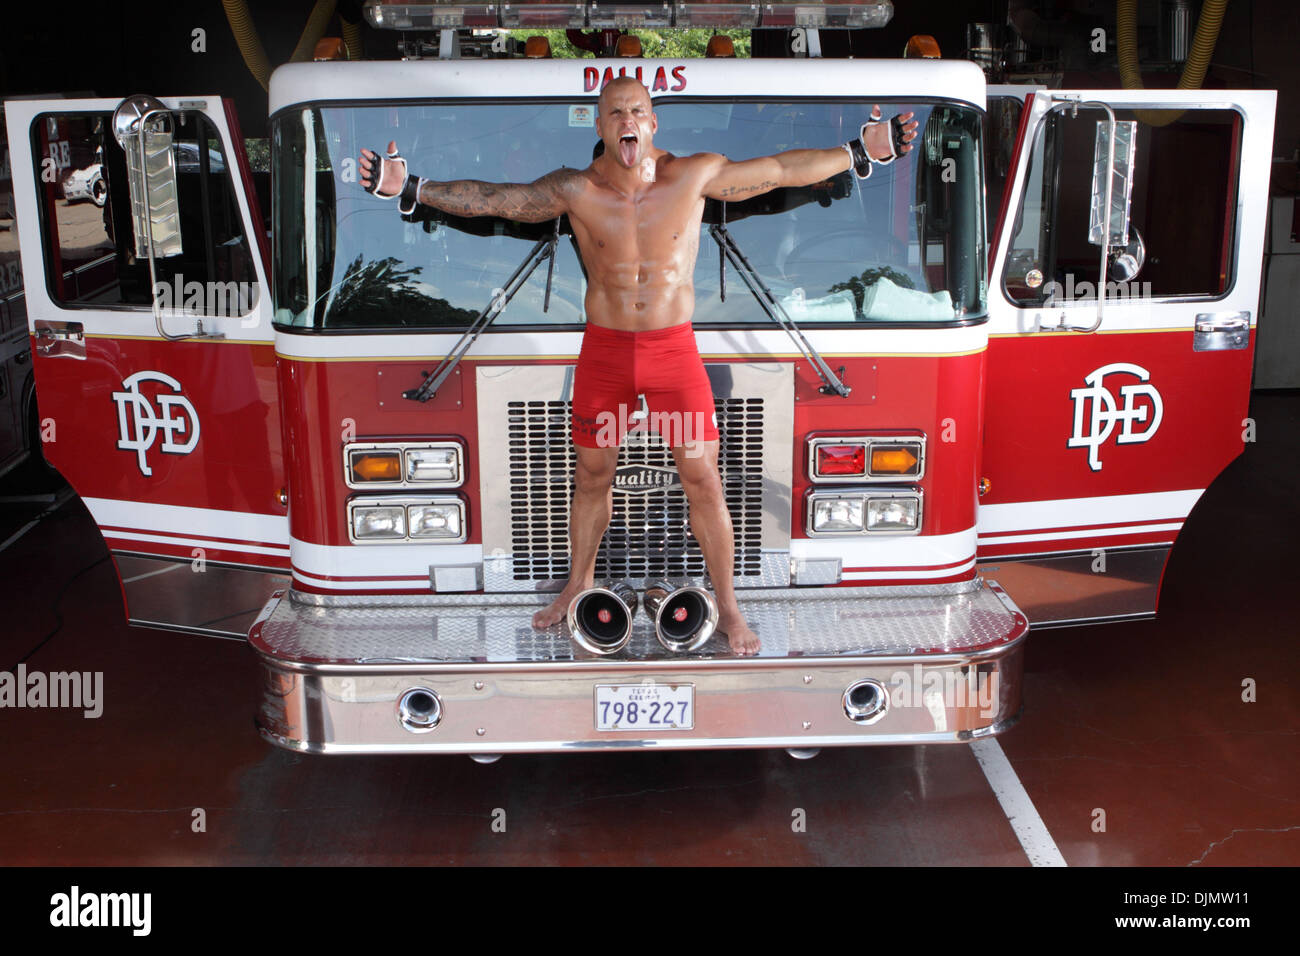 Jul 02, 2010 - Dallas, Texas, U.S. - Mixed Martial Arts fighters BRAD COX, who is also Dallas firefighters/paramedics, pose in the apparatus room of Dallas Fire-Rescue Station No. 8.  (Credit Image: © Robert Hughes/ZUMAPRESS.com) Stock Photo